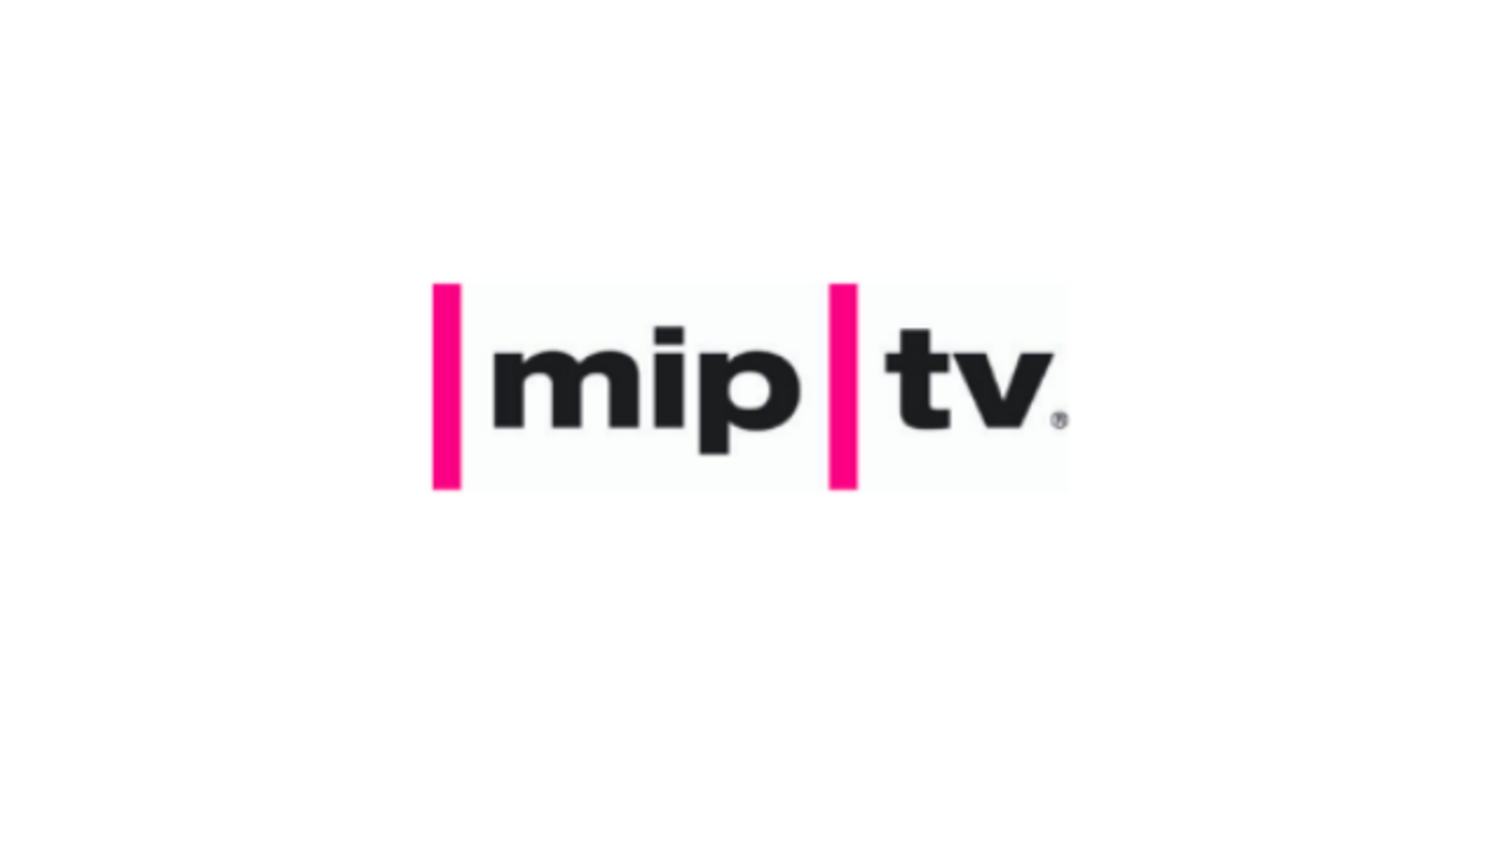 MIPTV - The Spring International Television Market